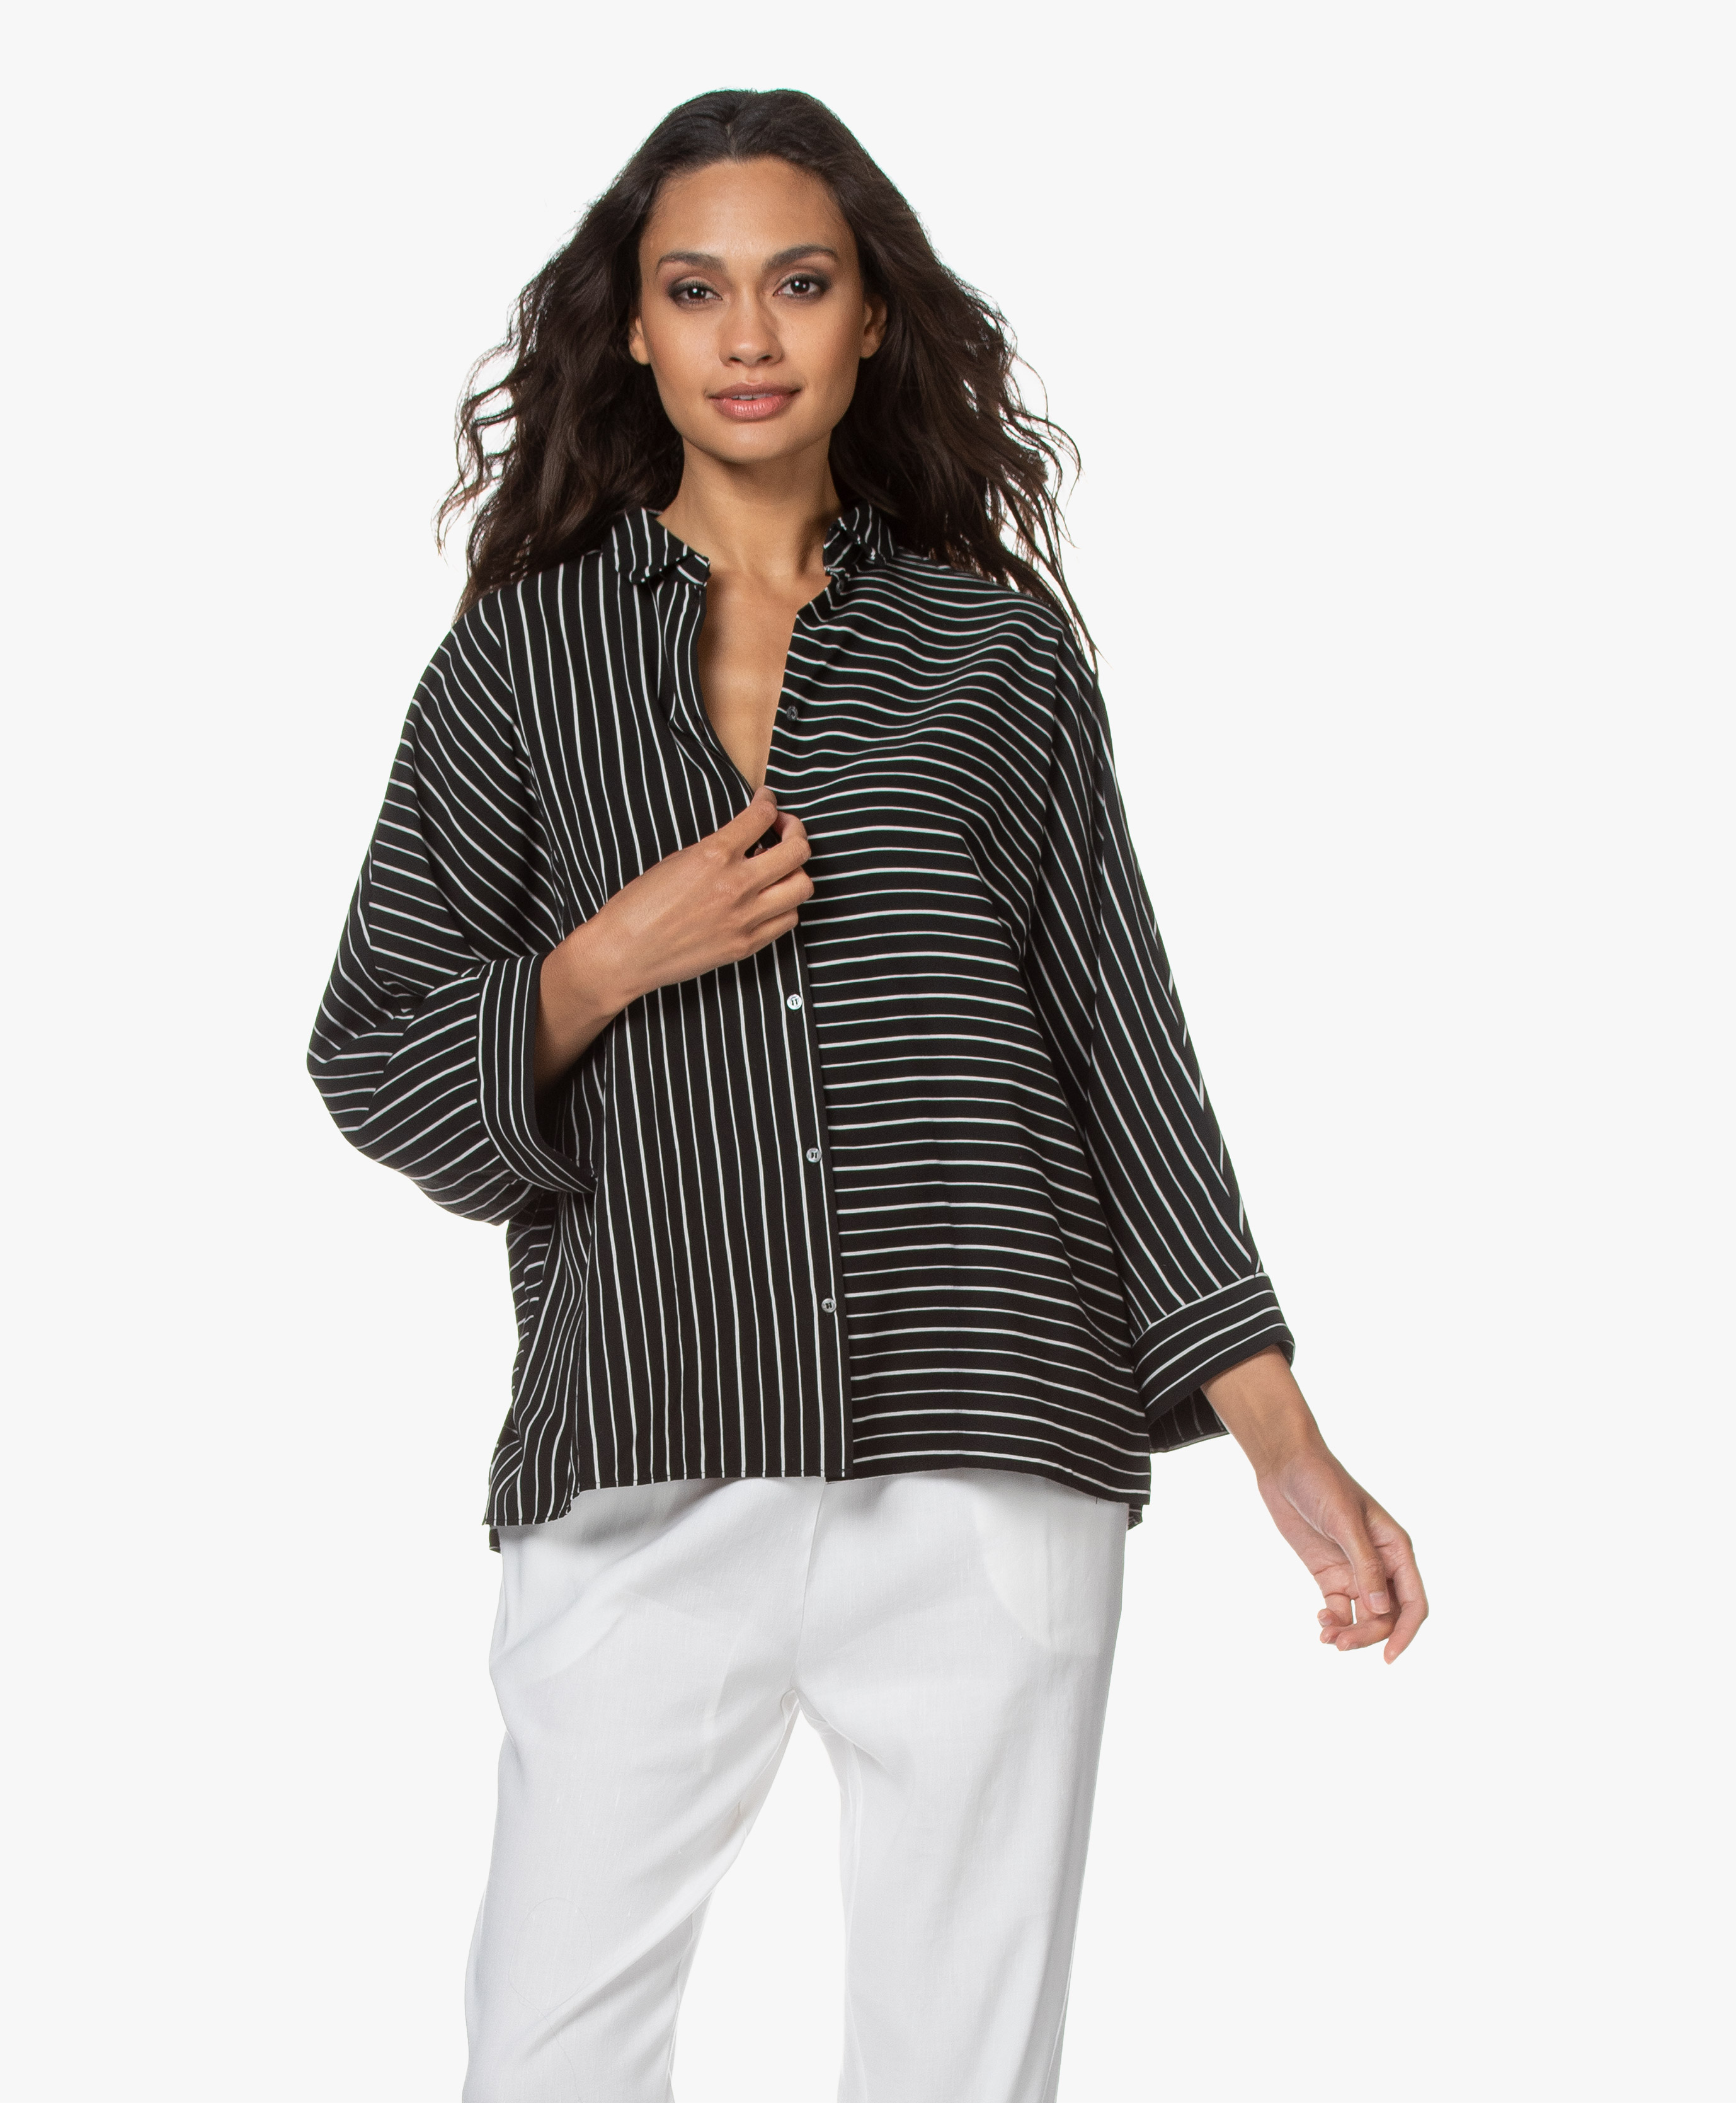 Black And White Striped Blouse - H M White Black Striped Blouse / It ...